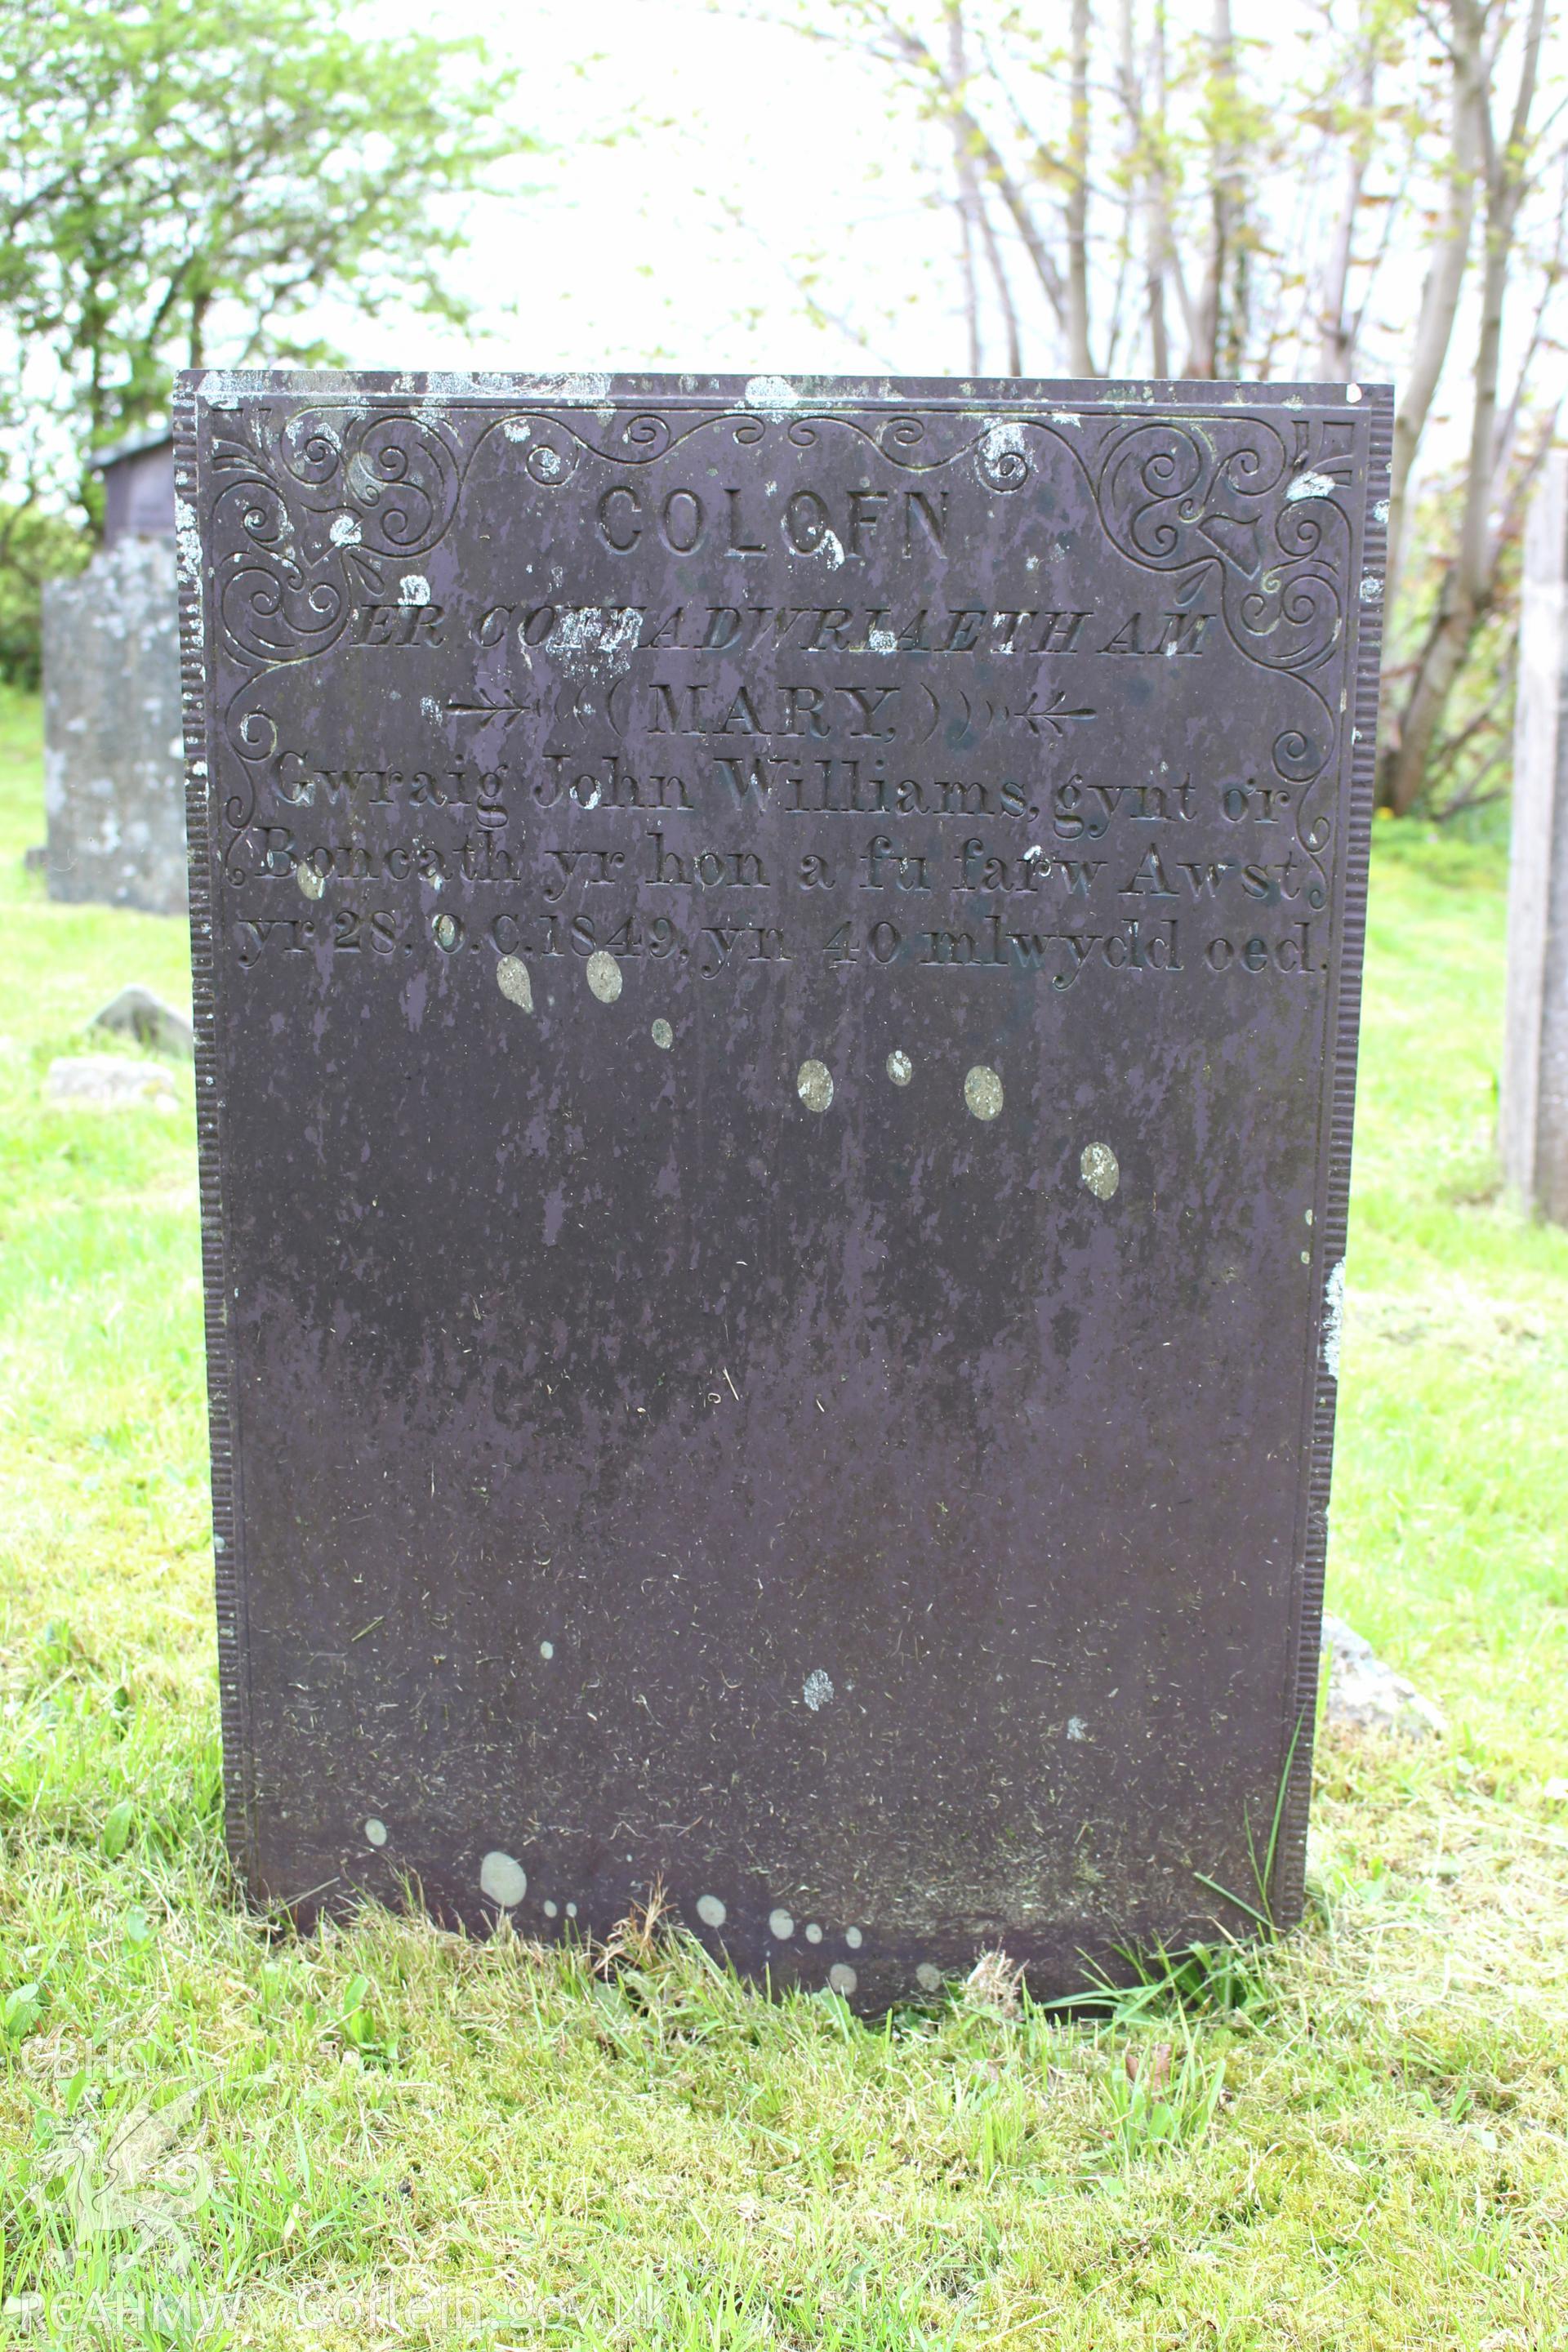 Gravestone of Mary Williams